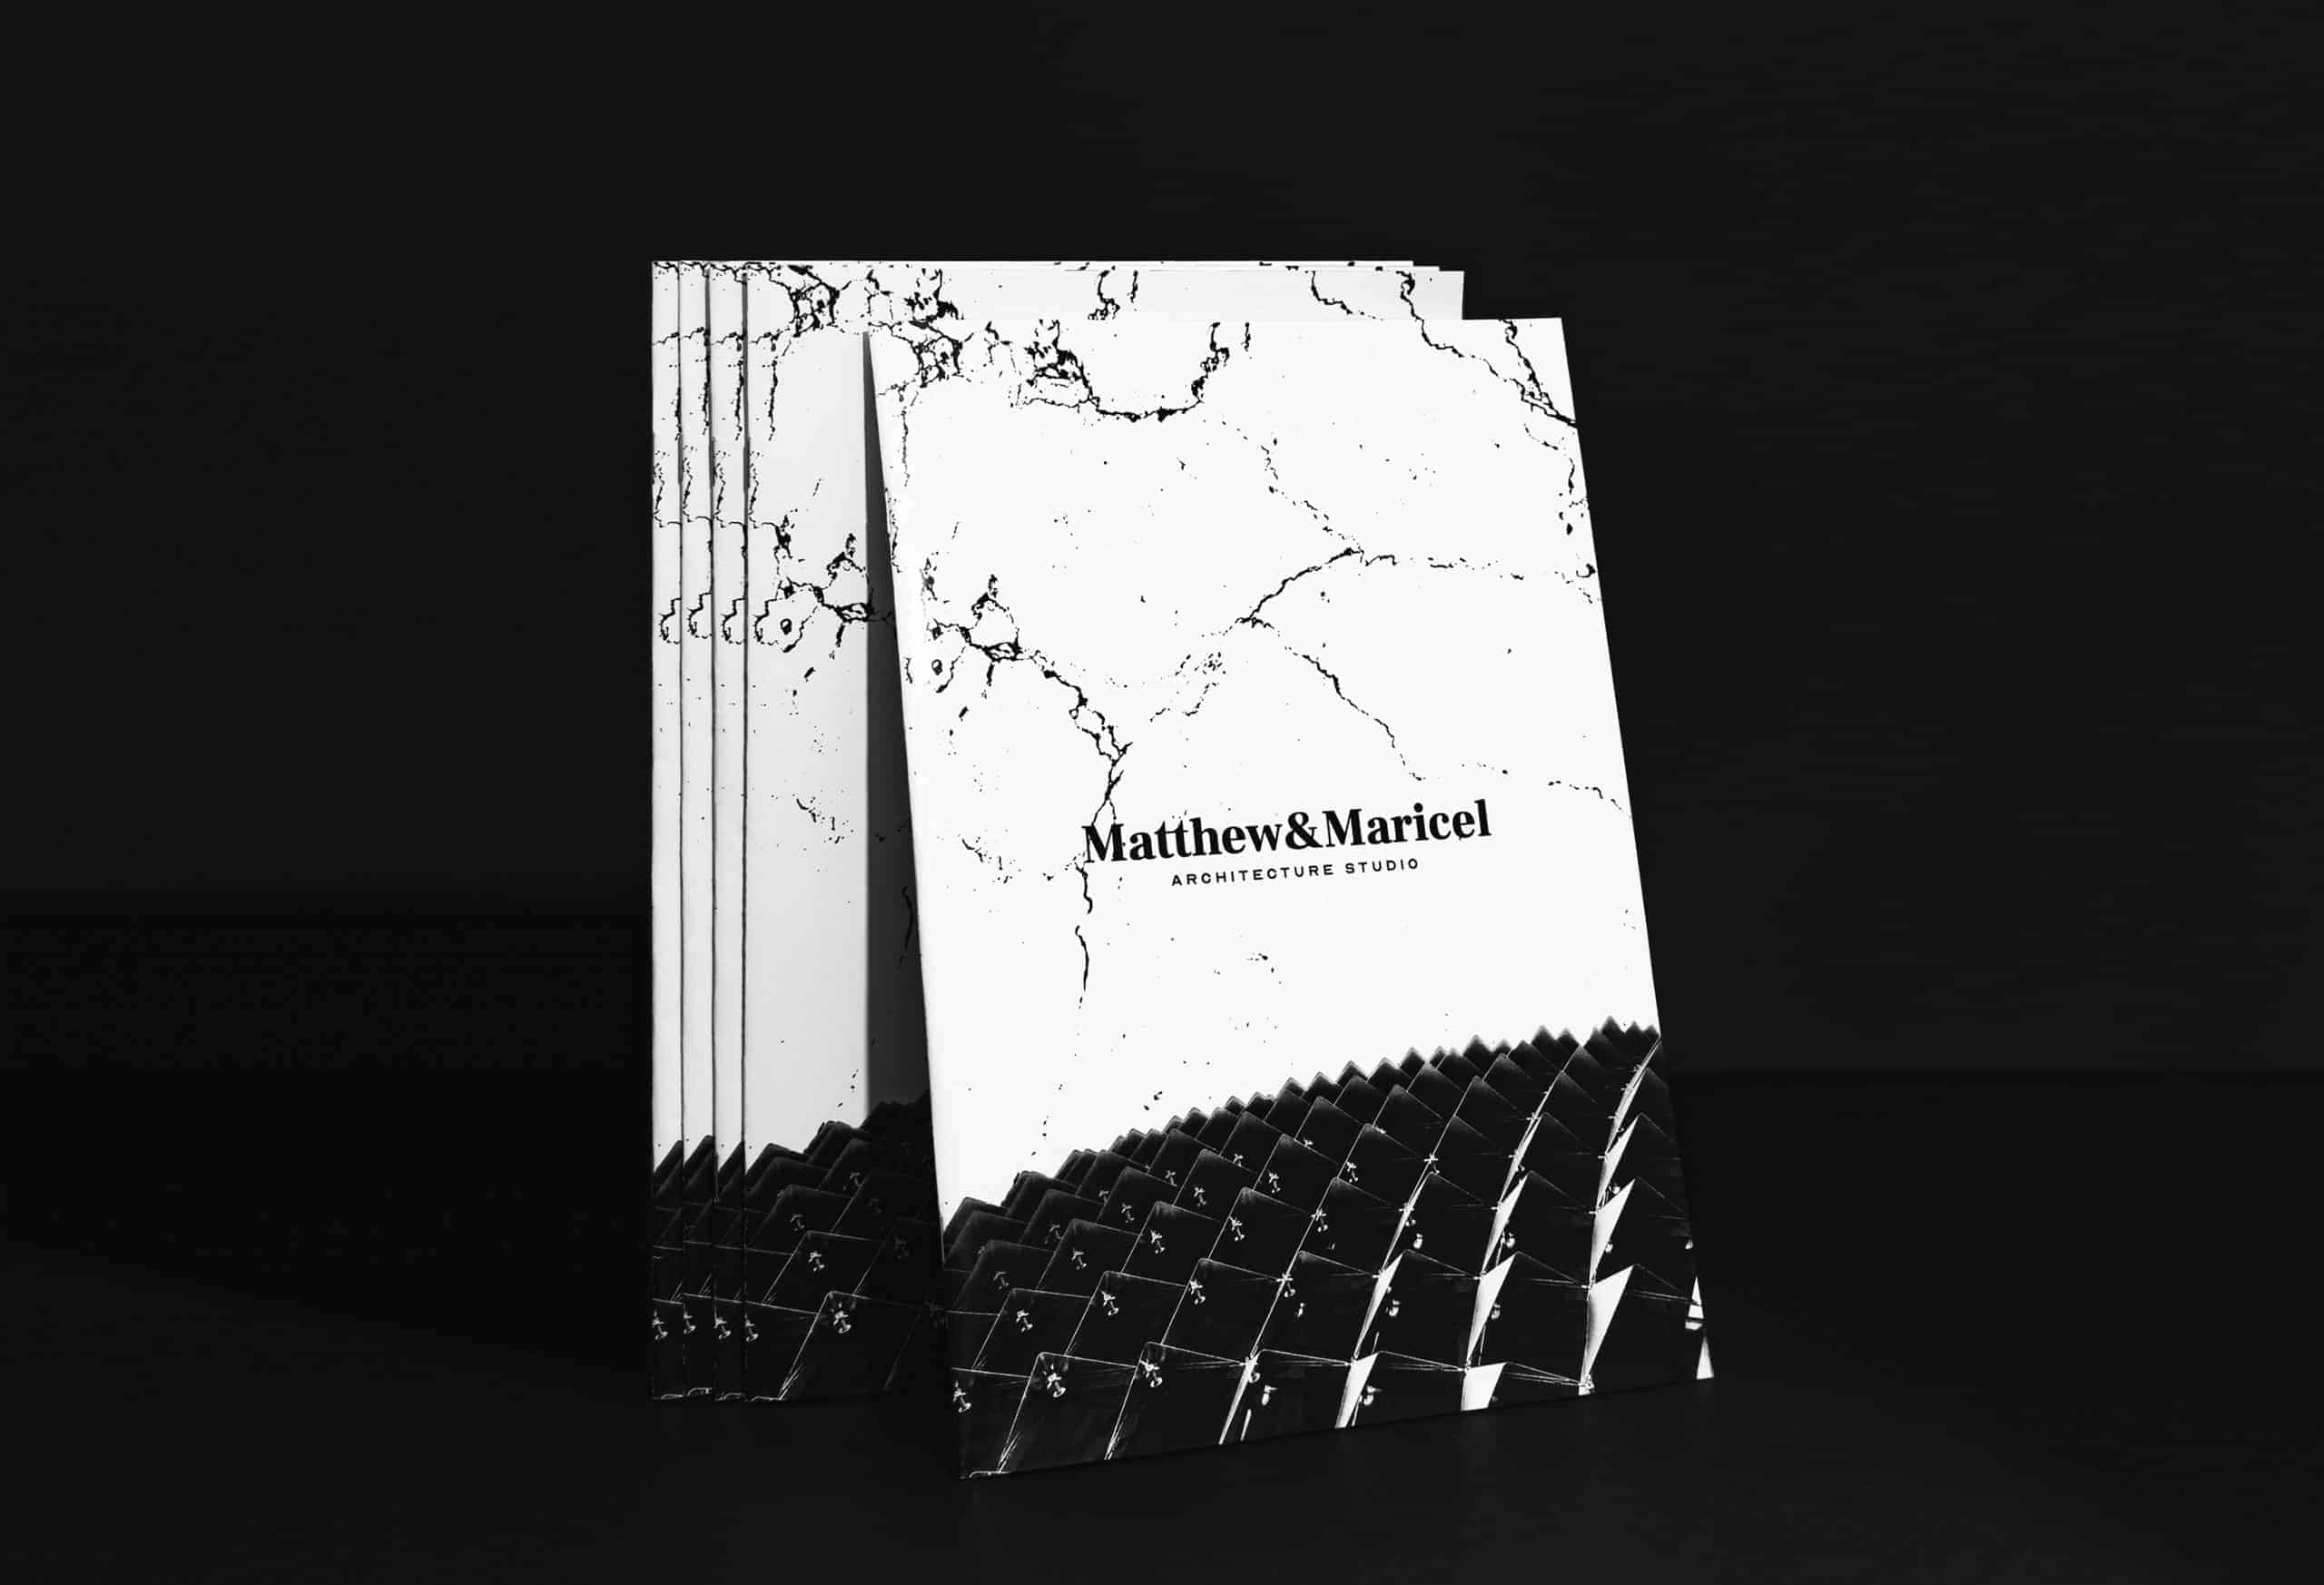 Matthew&Maricel Architecture Studio